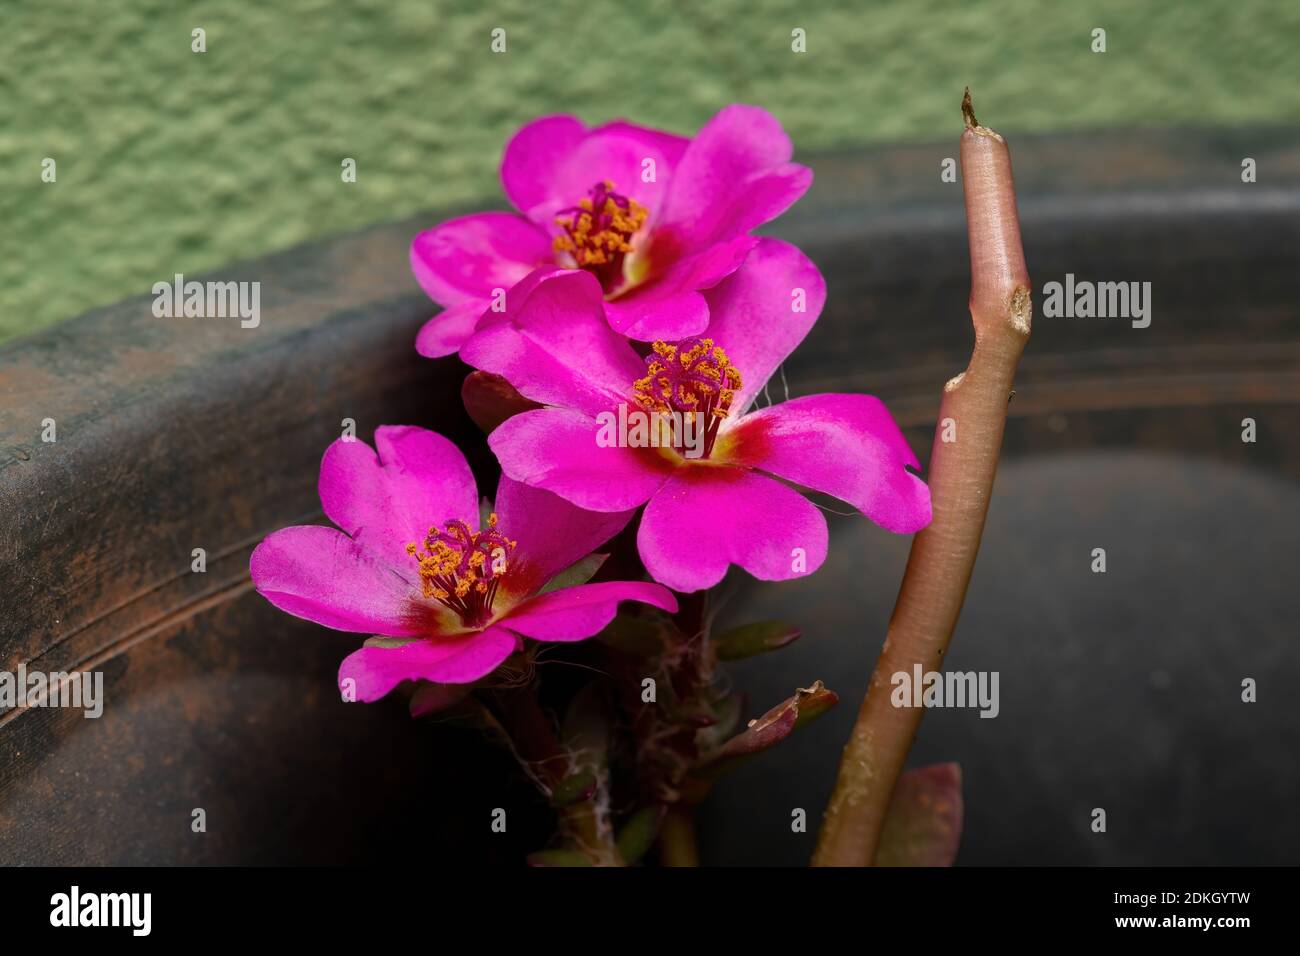 Paraguayan Purslane Flower of the species Portulaca amilis Stock Photo